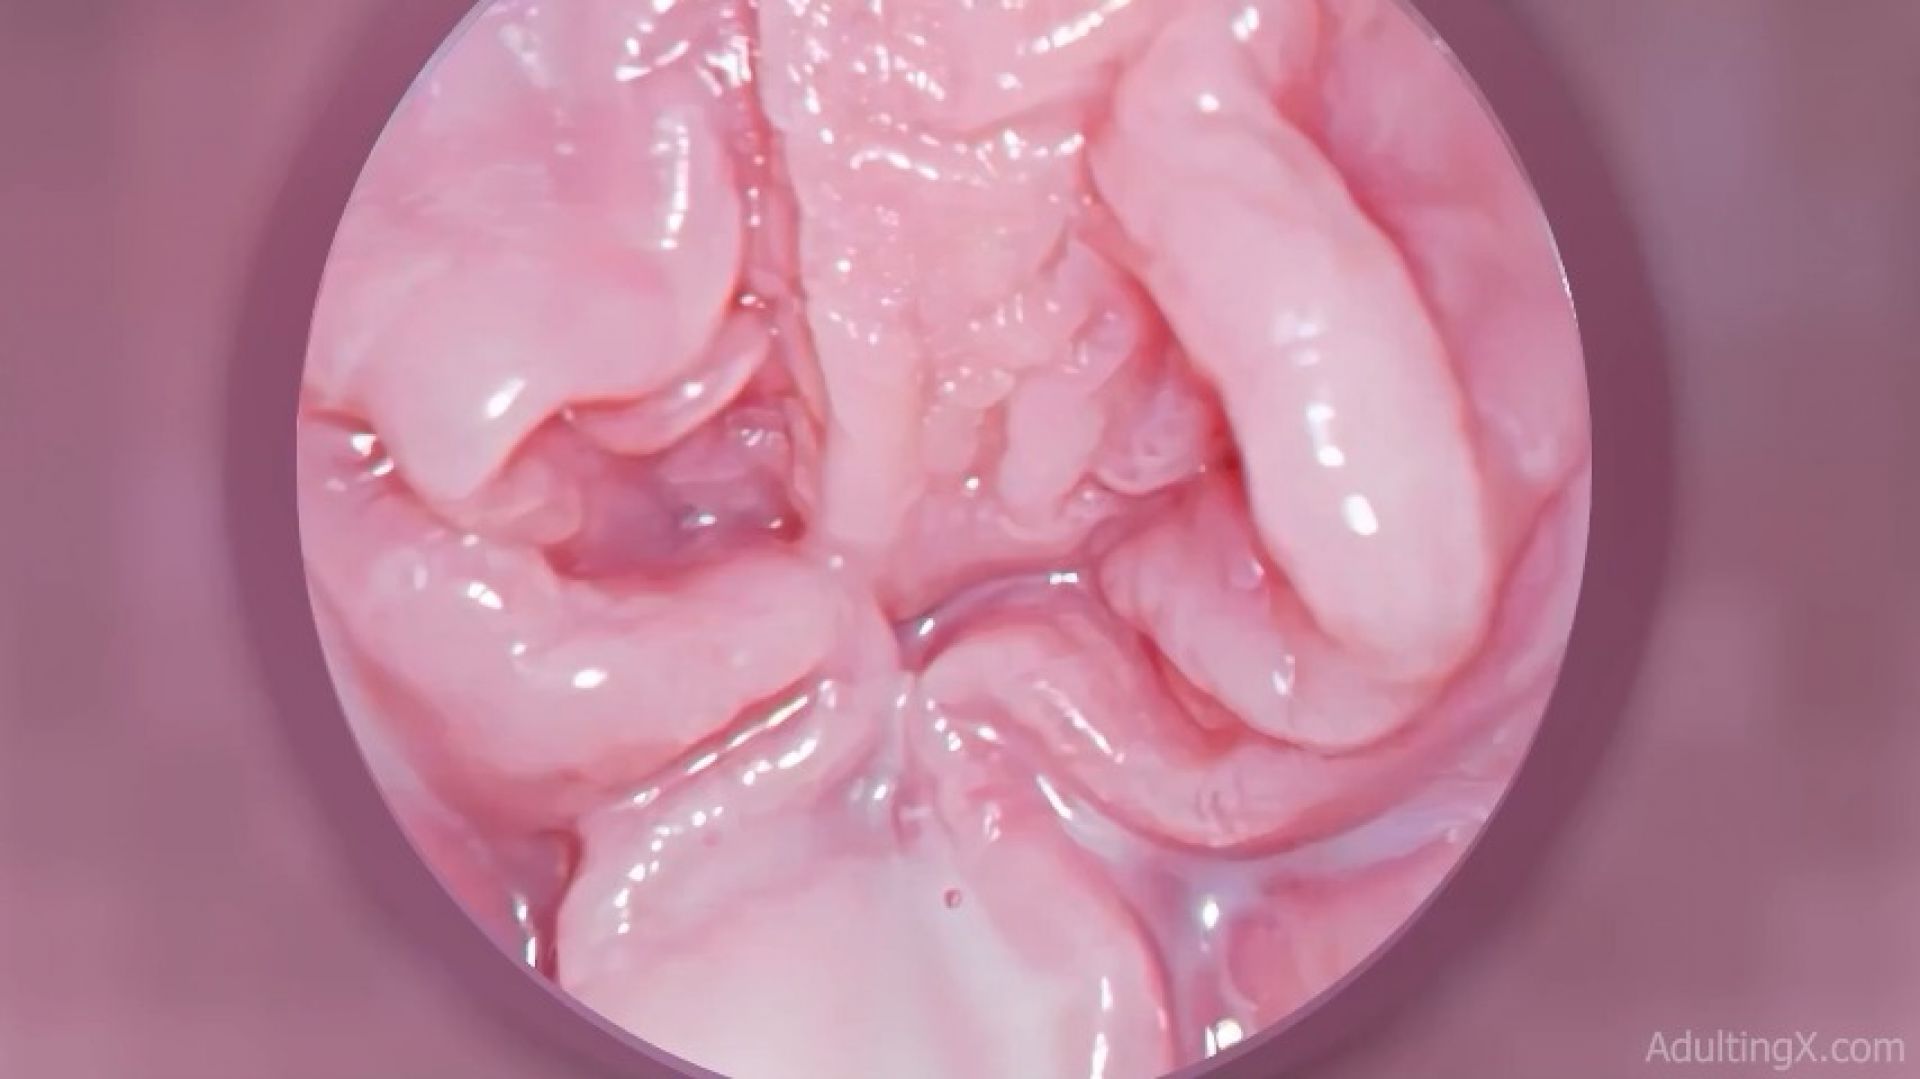 adulting - Alt View - Internal Top Left - Cervix Creampie Fuck POV 3X -  ManyVids